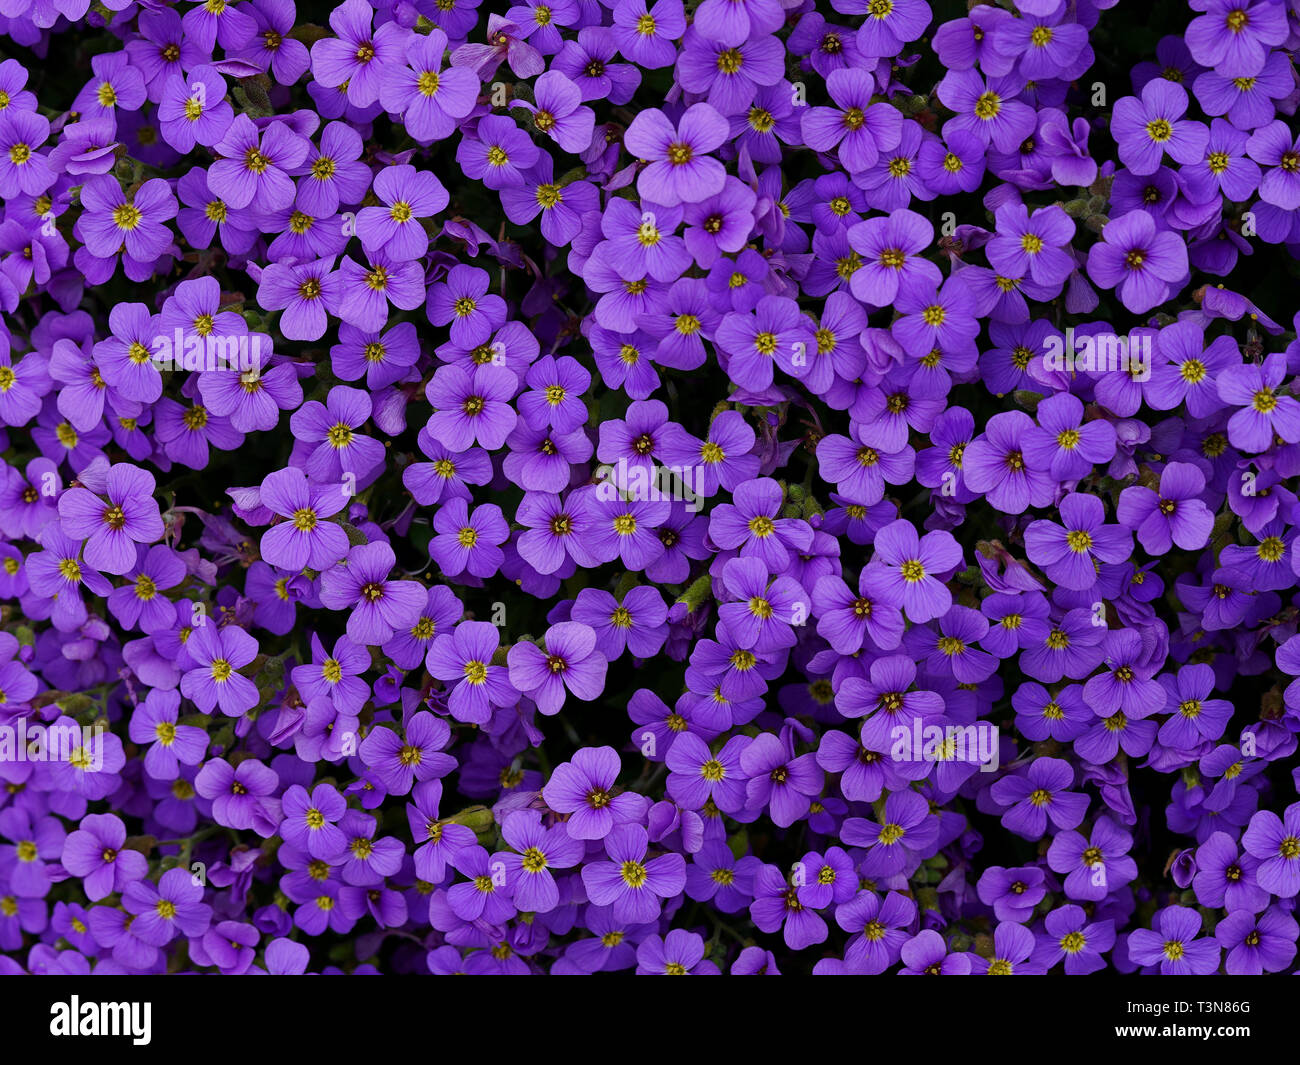 Purple flower pillow aubrieta hybrid wall paper Stock Photo